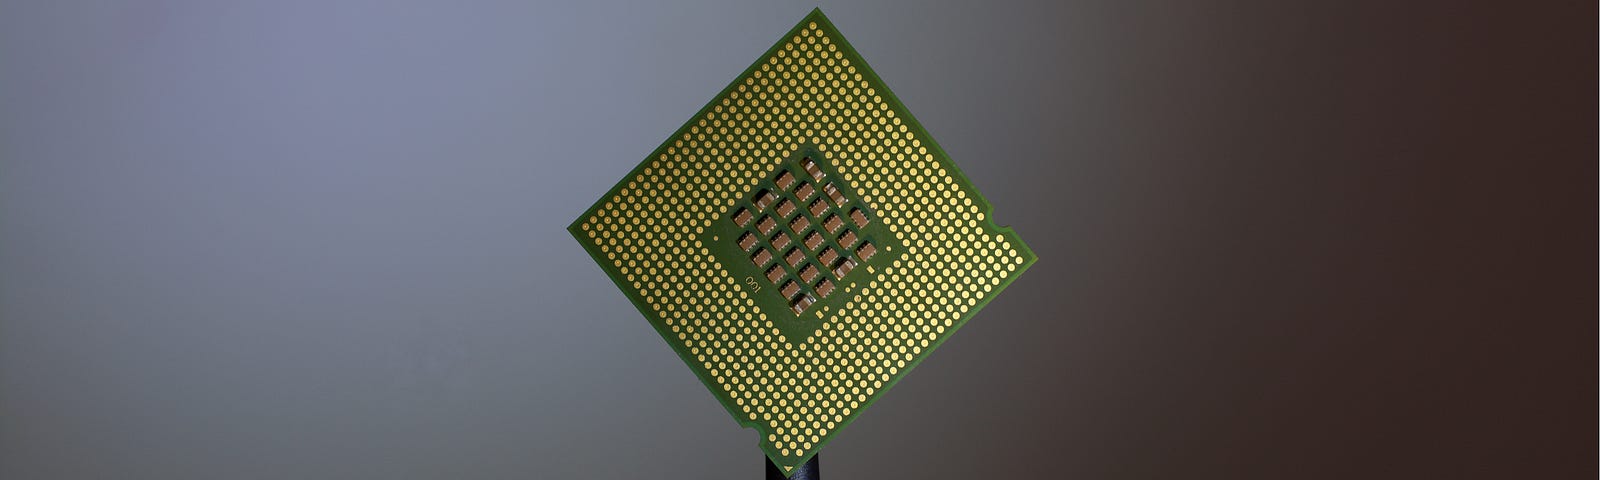 Computer chip on held the end of tweezers